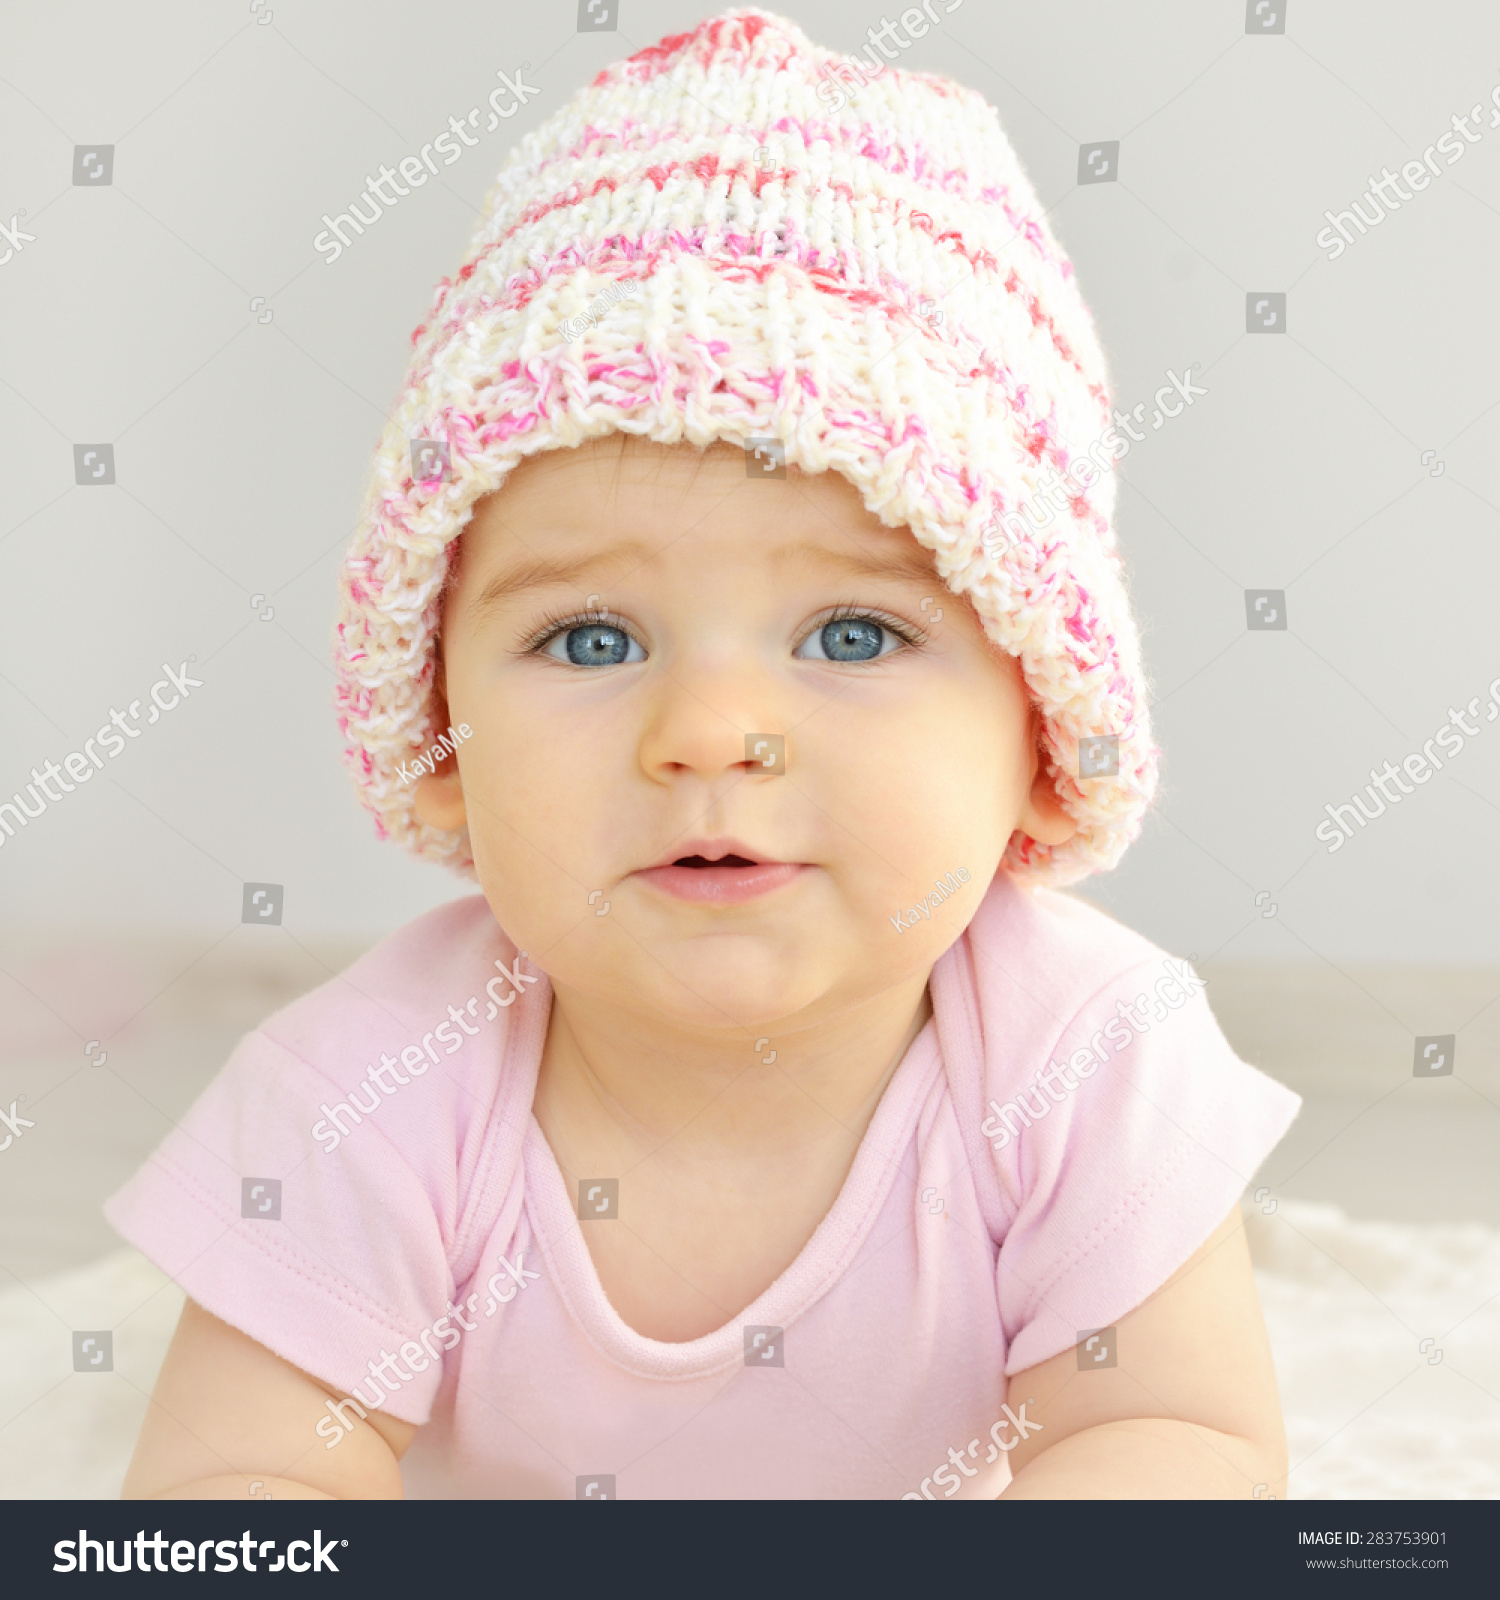 little baby hats